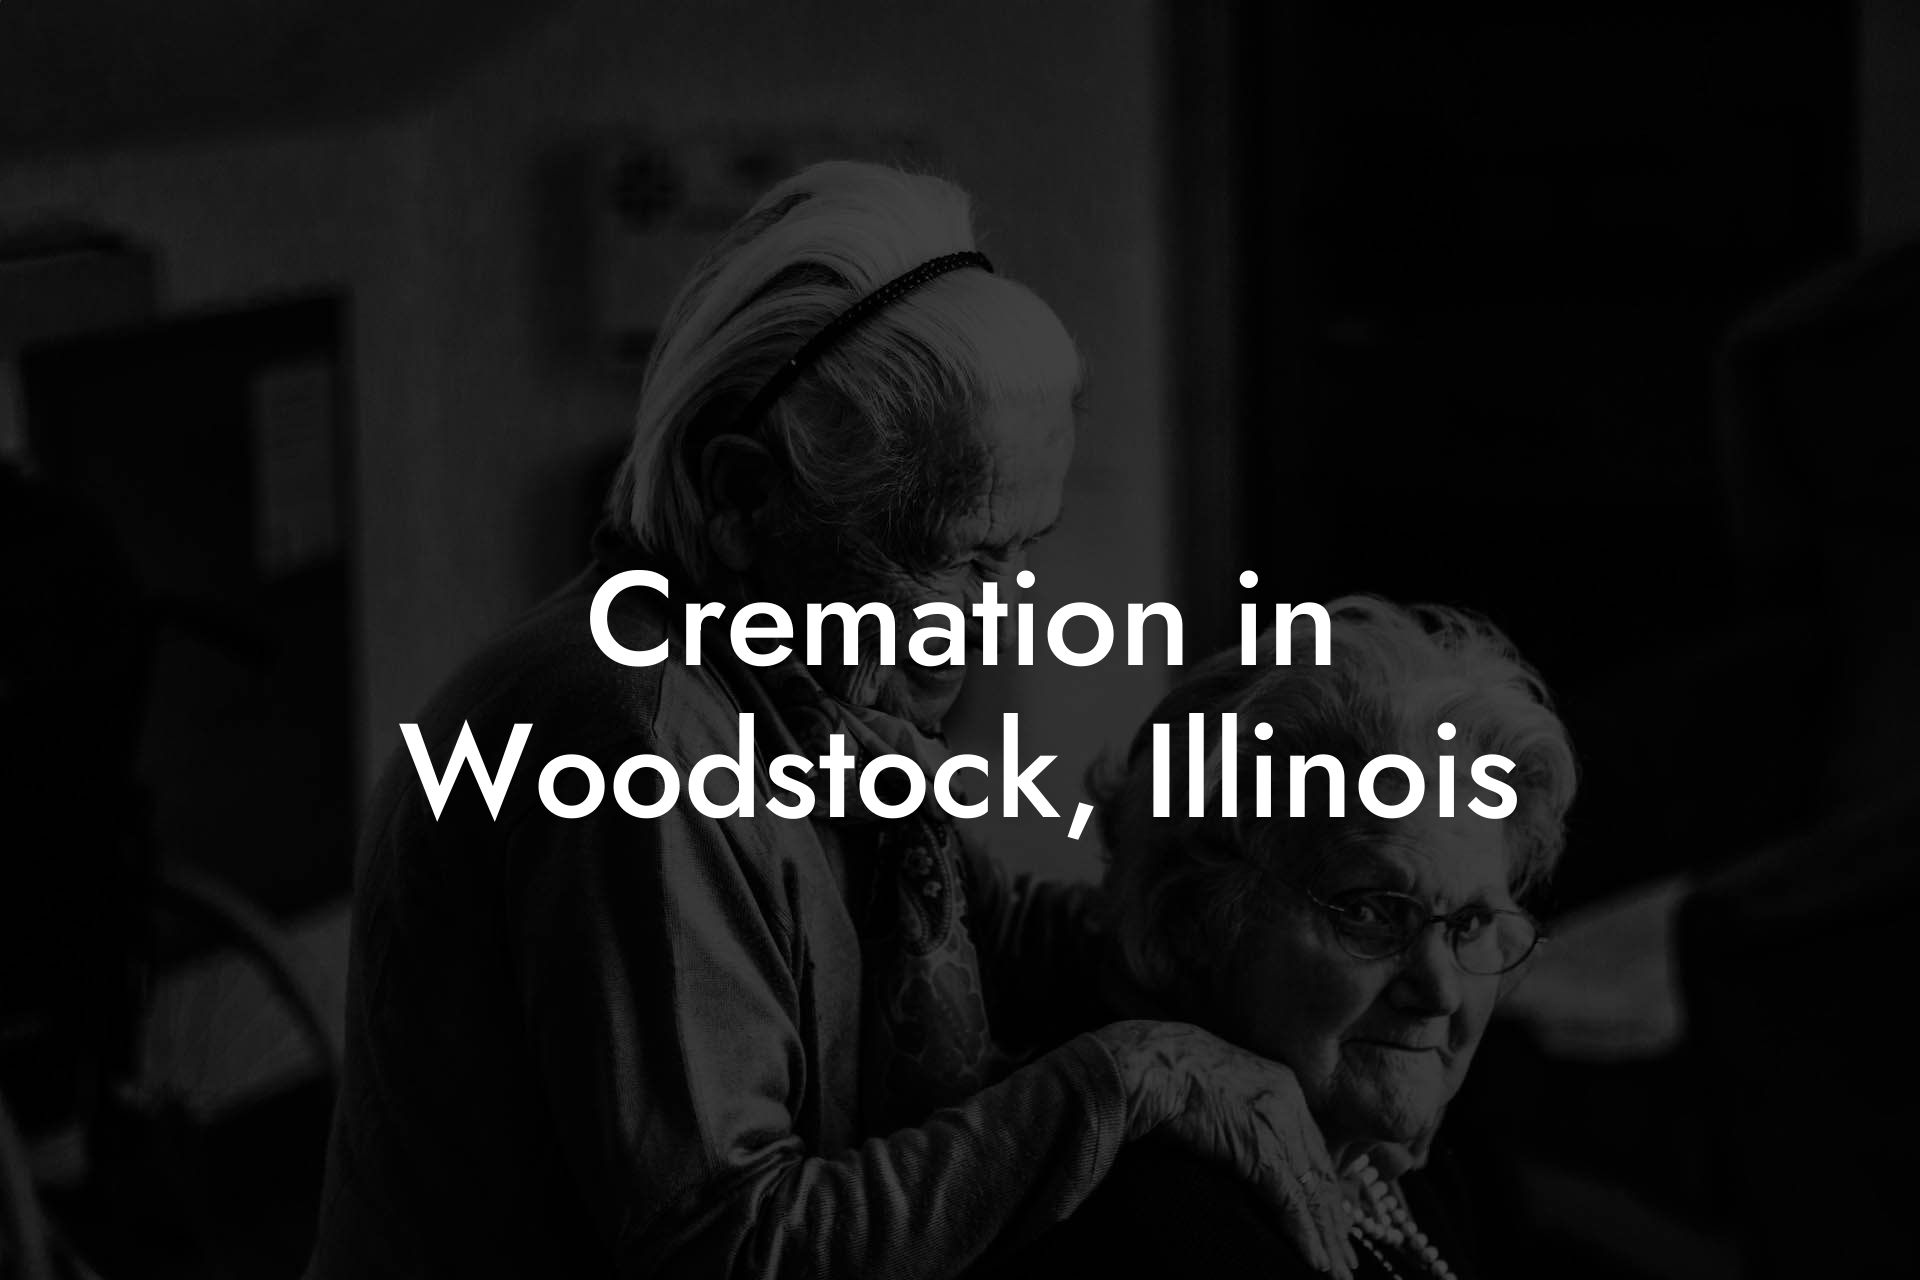 Cremation in Woodstock, Illinois